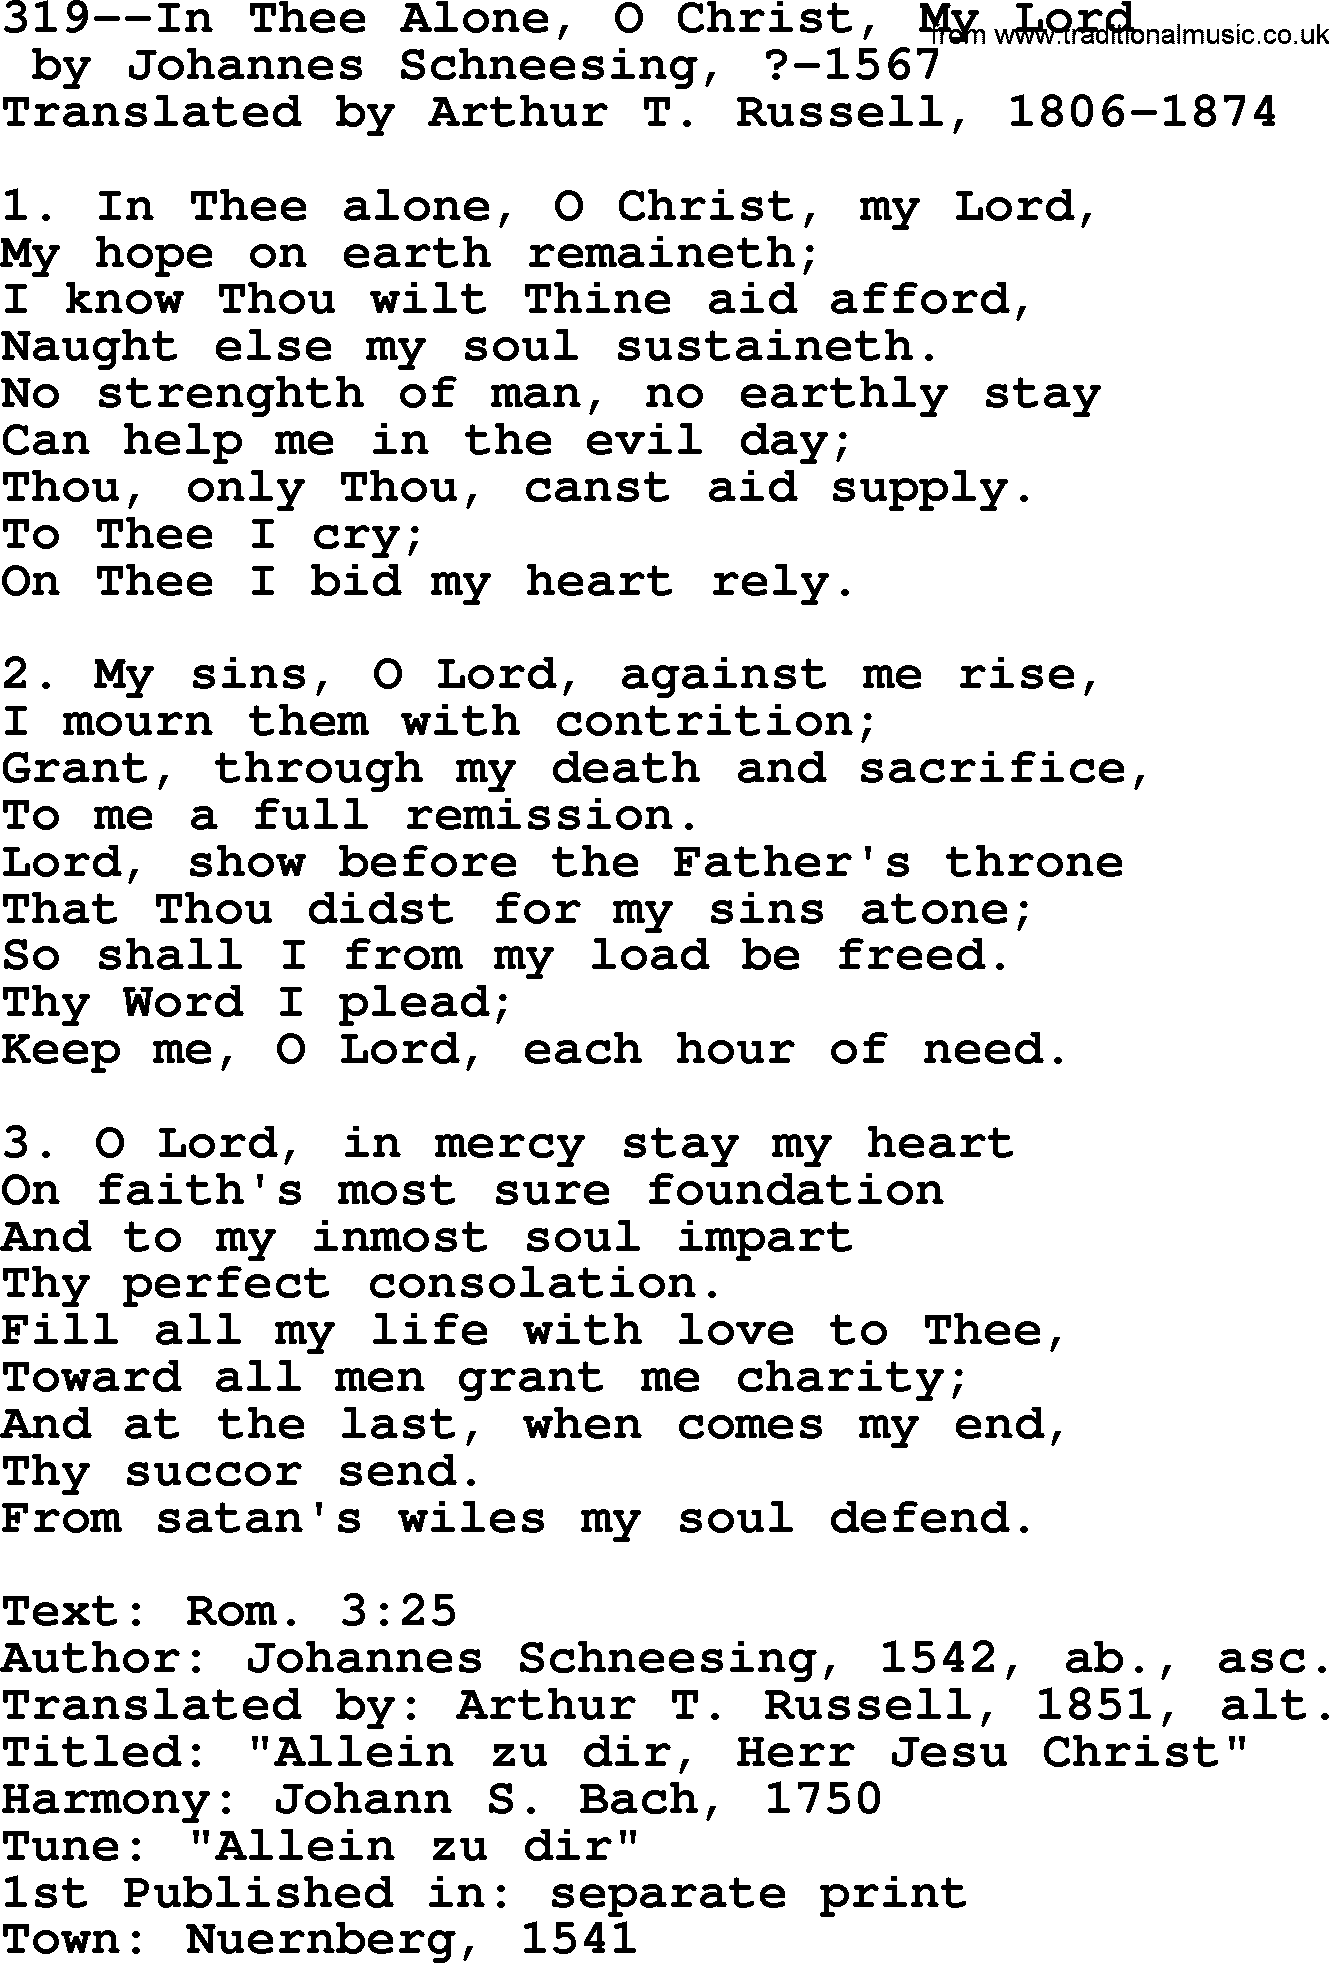 Lutheran Hymn: 319--In Thee Alone, O Christ, My Lord.txt lyrics with PDF